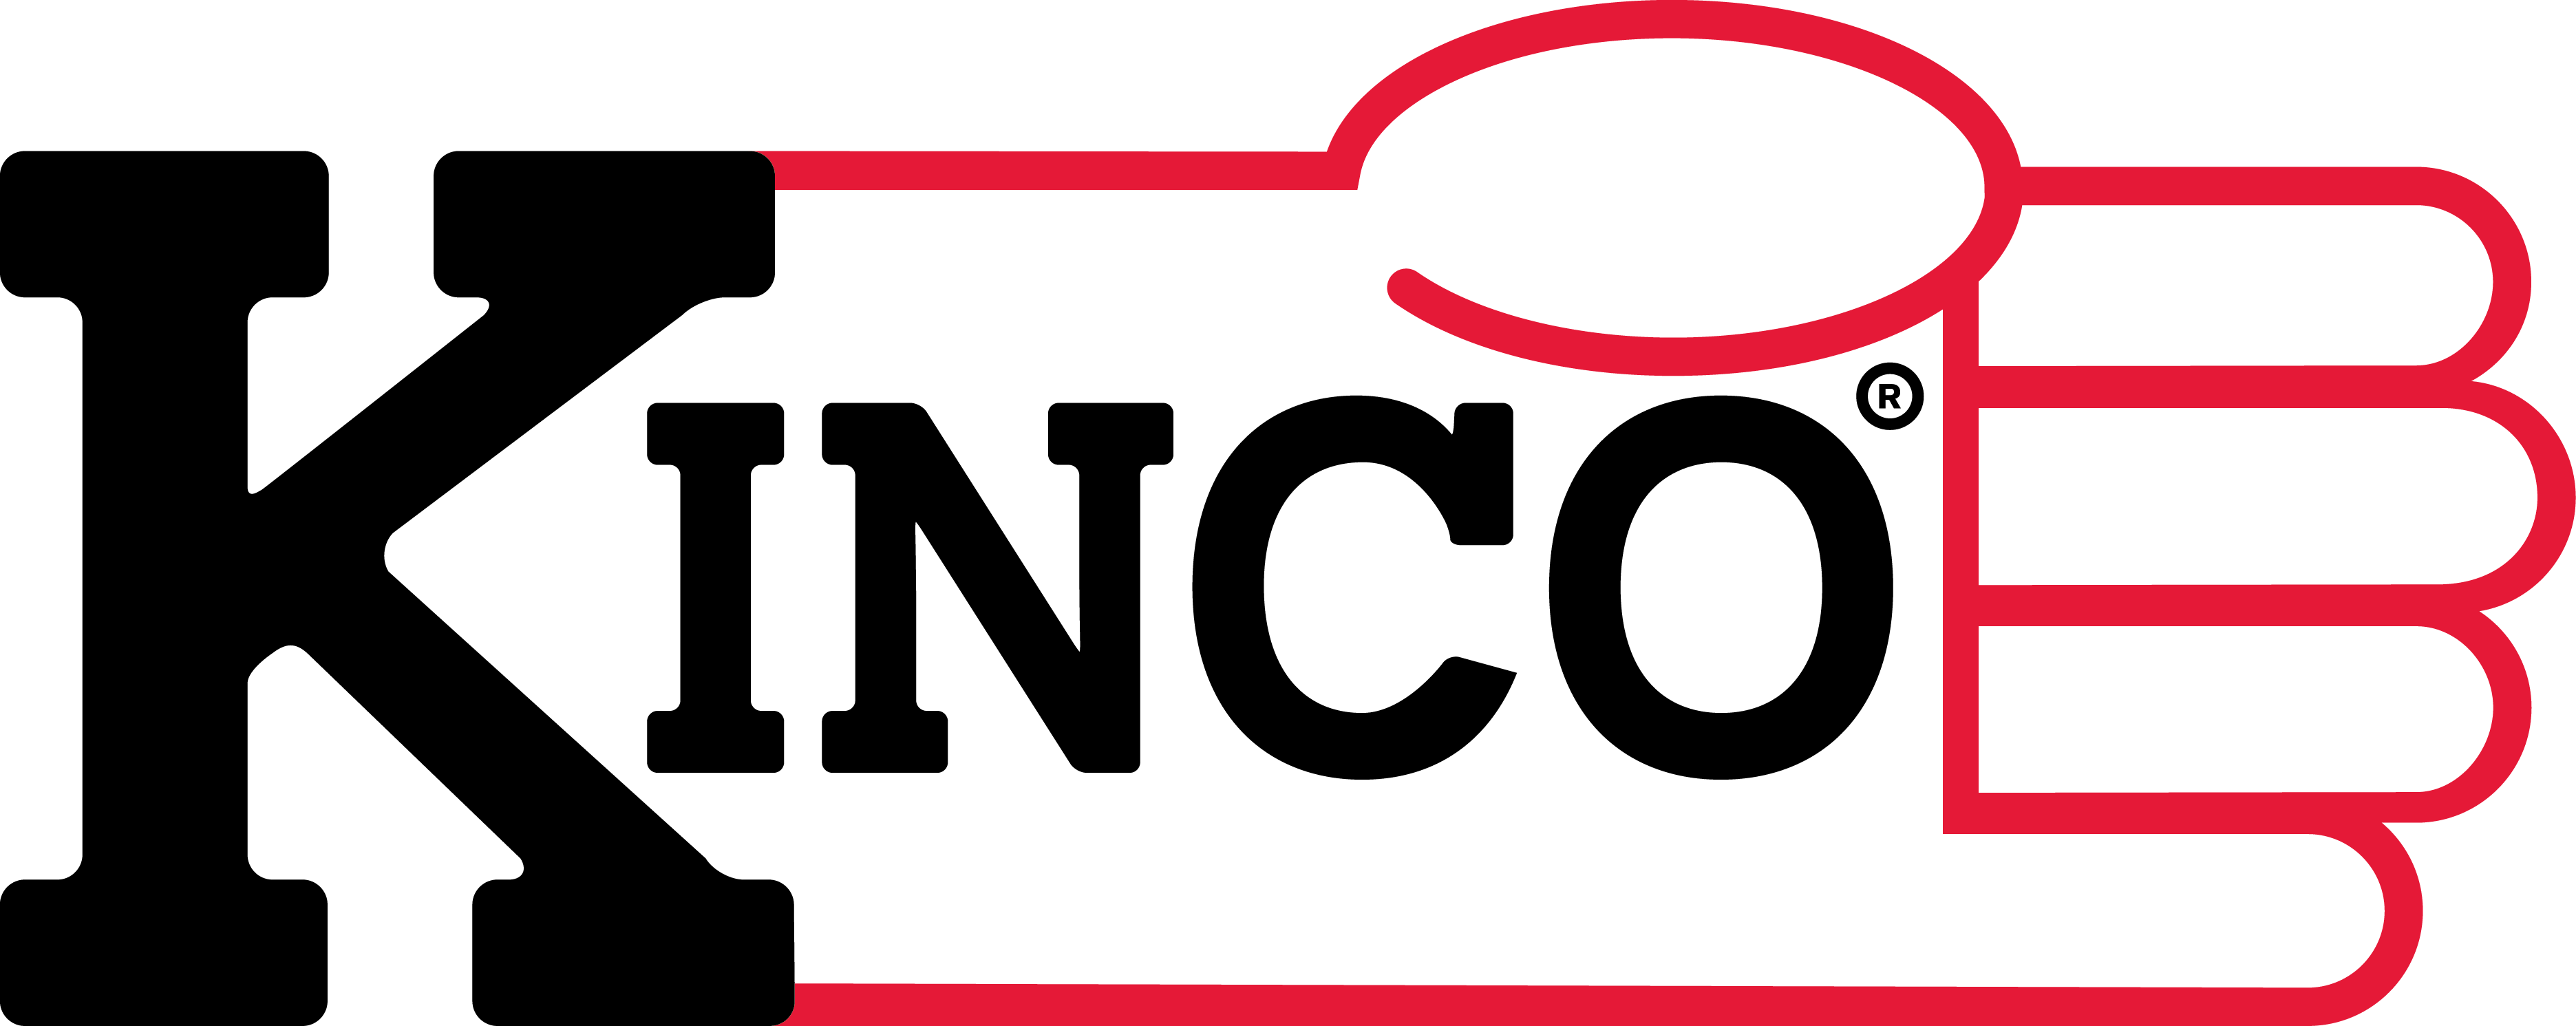 Kinco logo and wordmark